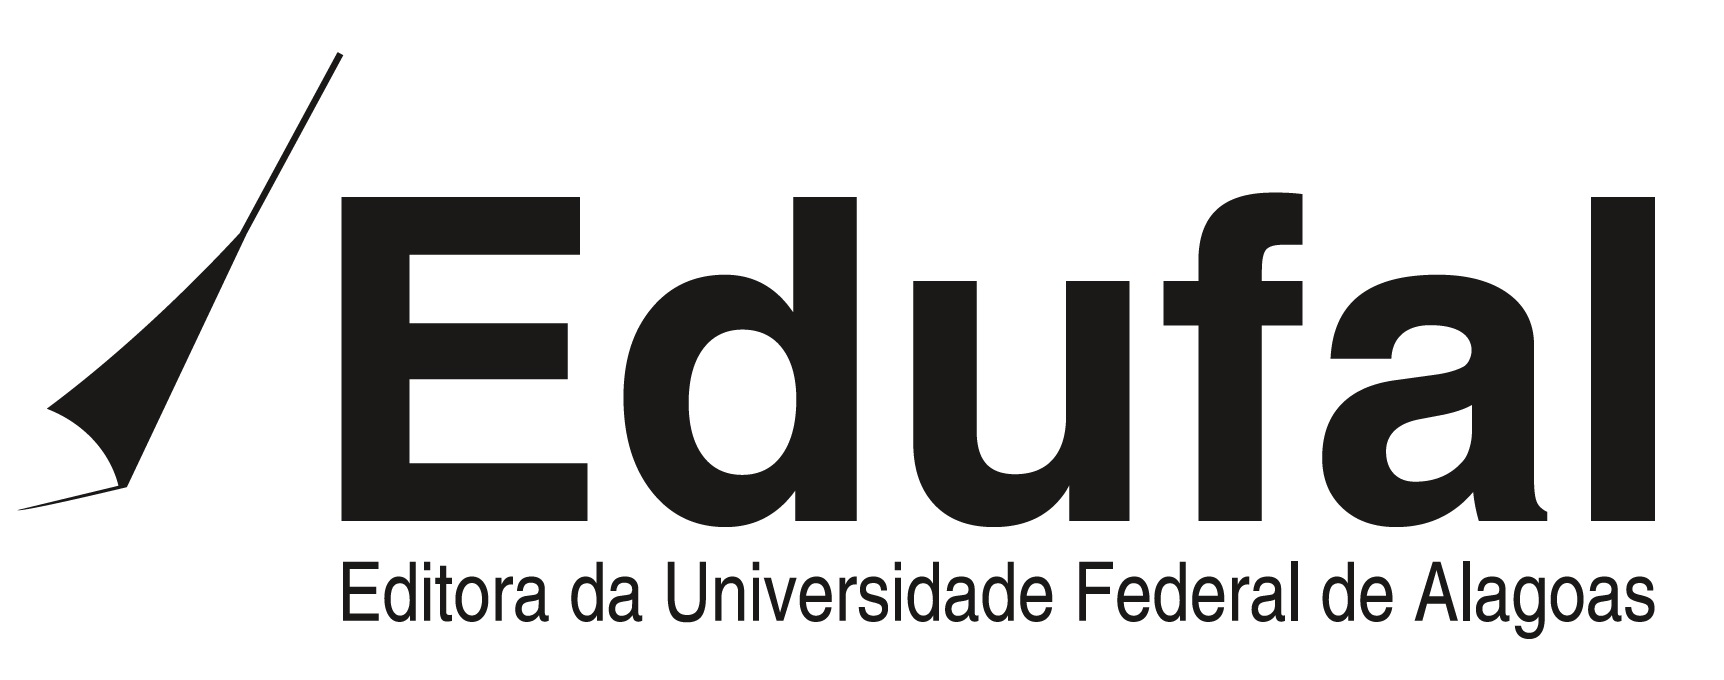 Editora da Universidade Federal de Alagoas